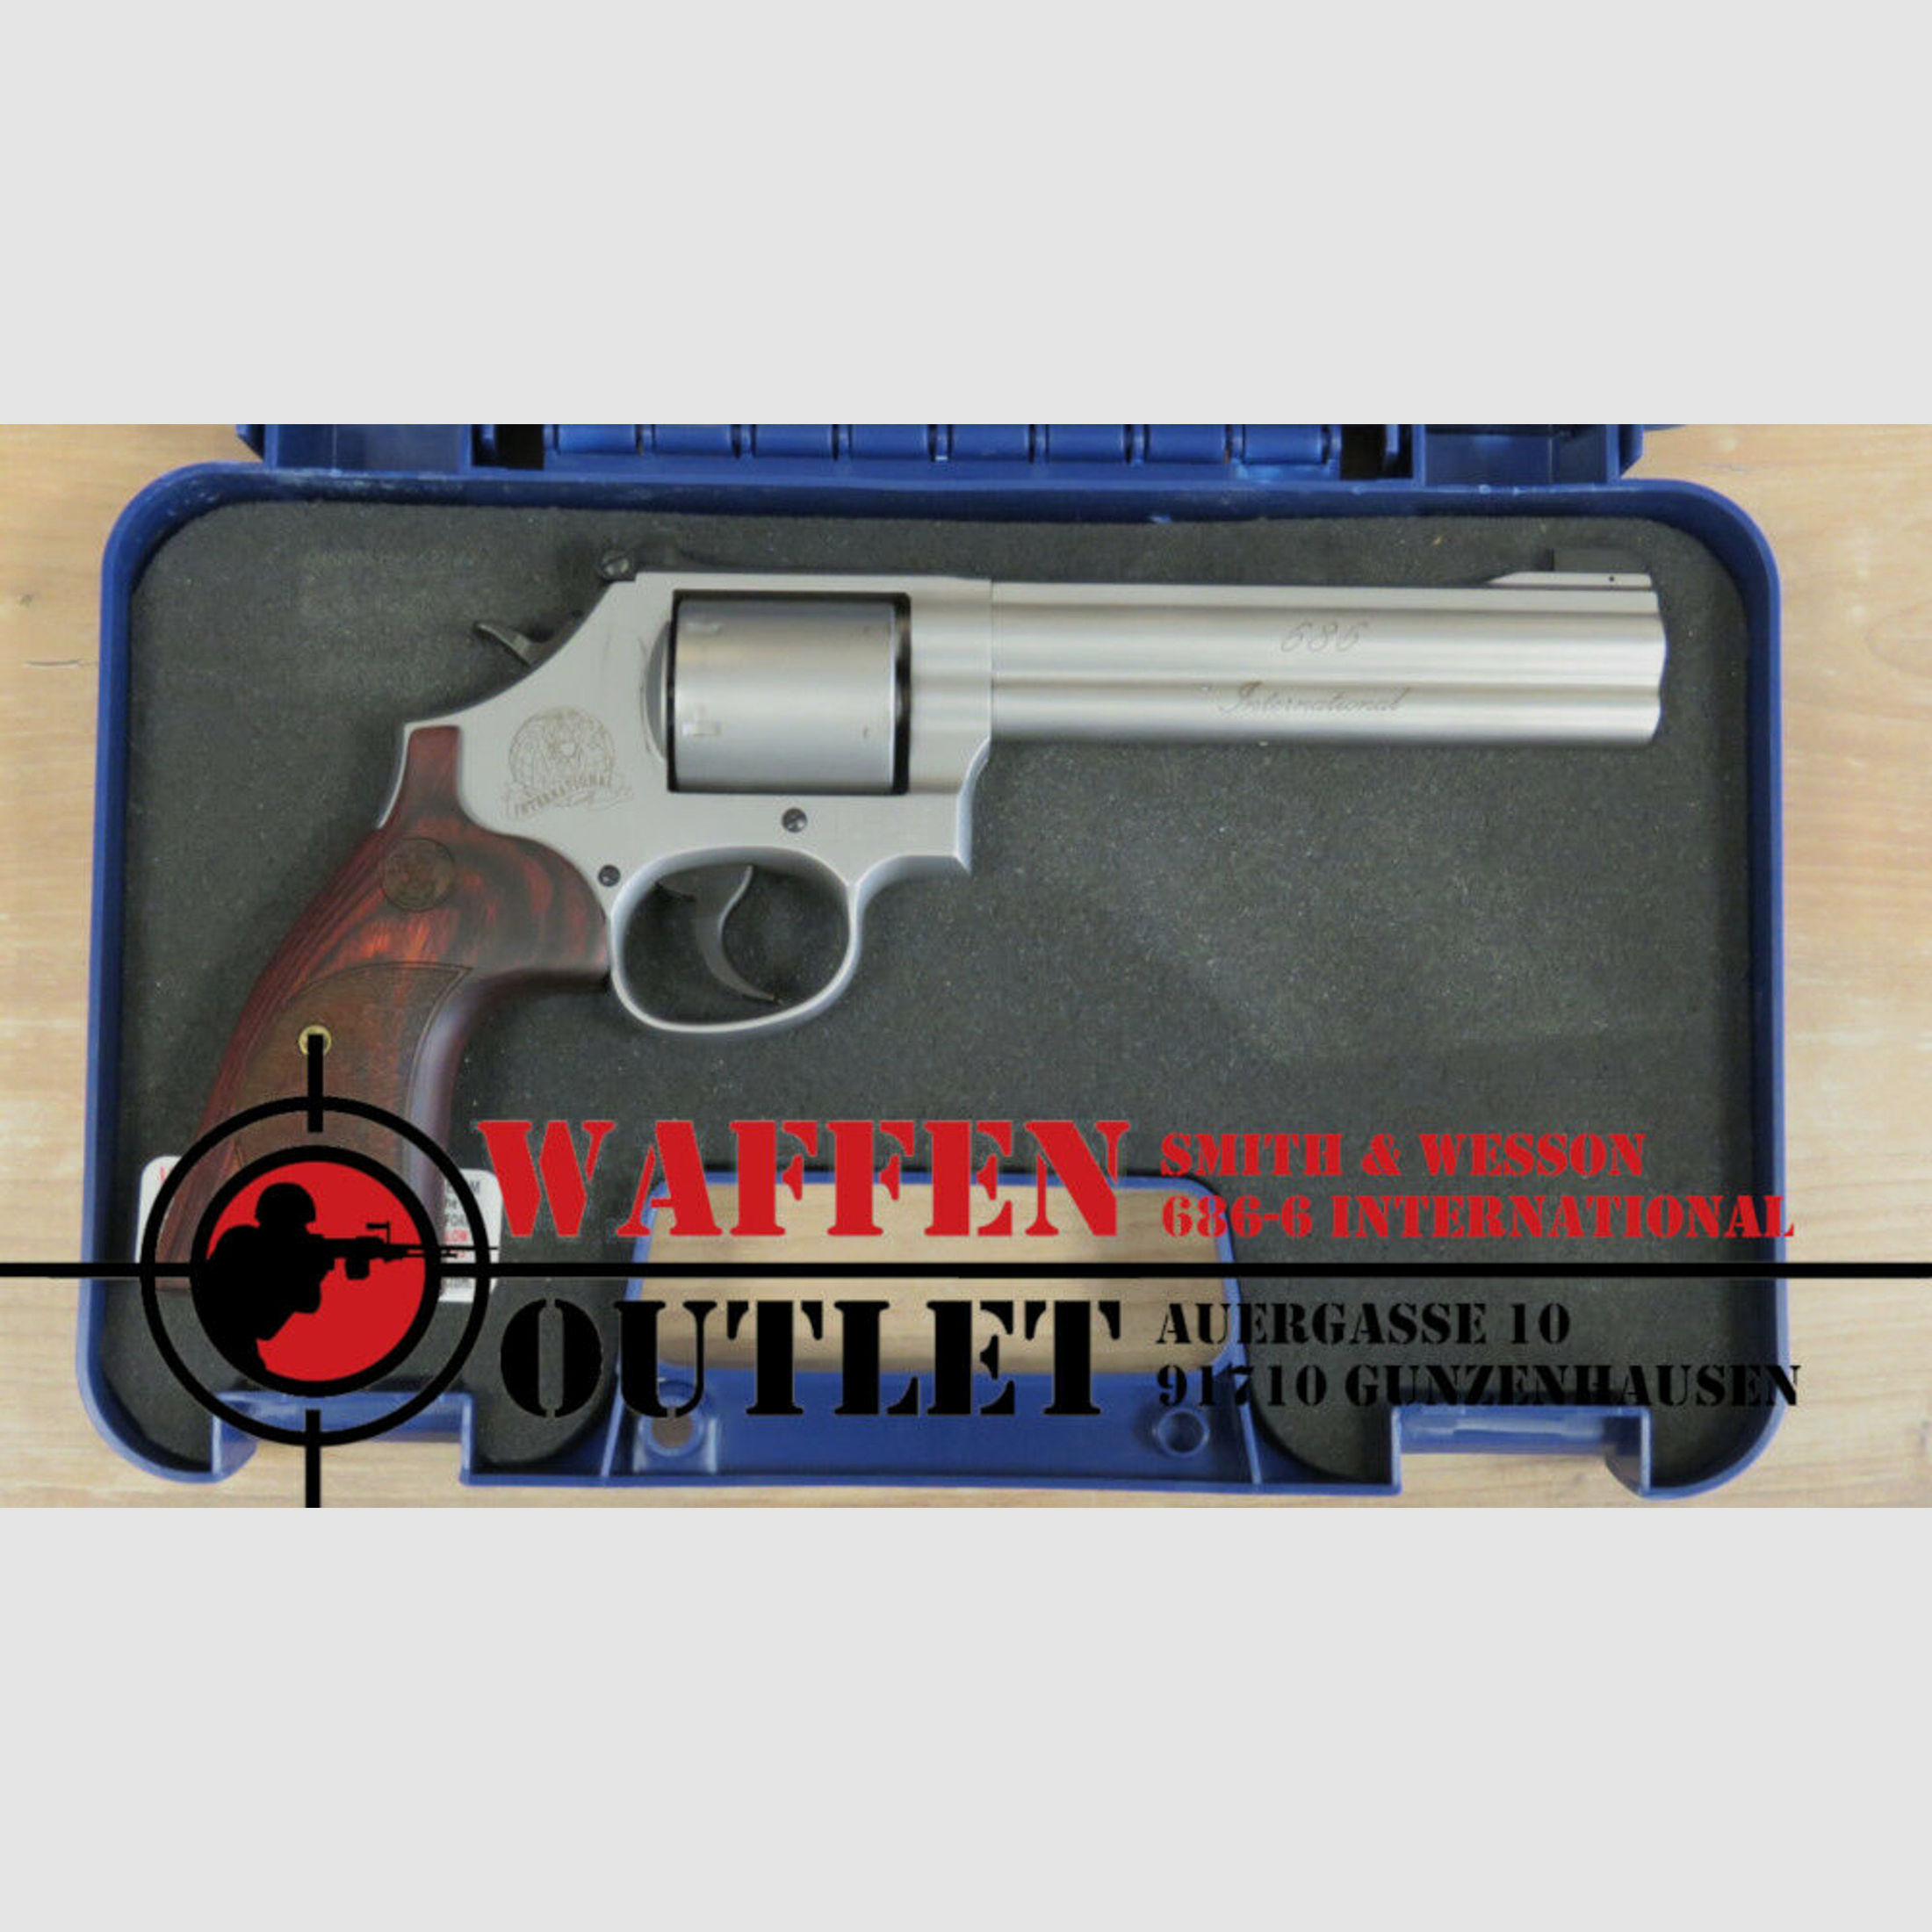 Smith & Wesson	 Model 686-6 International